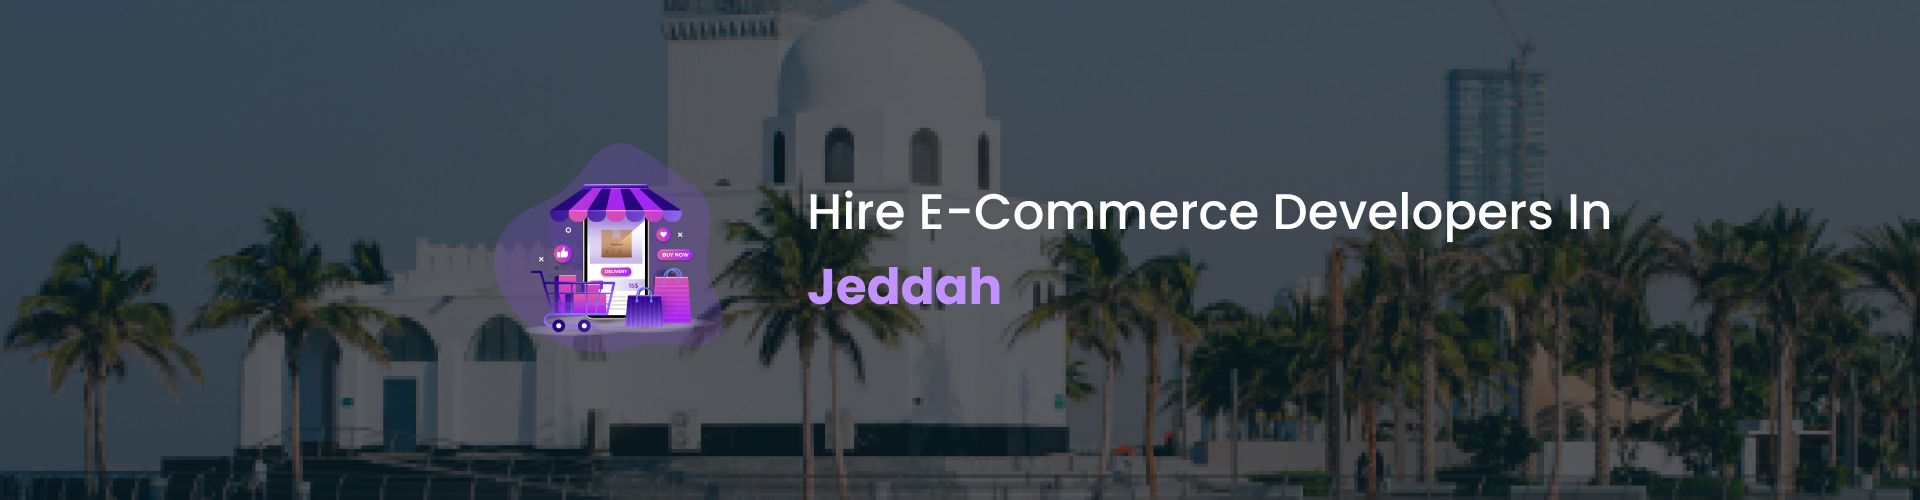 ecommerce developers jeddah